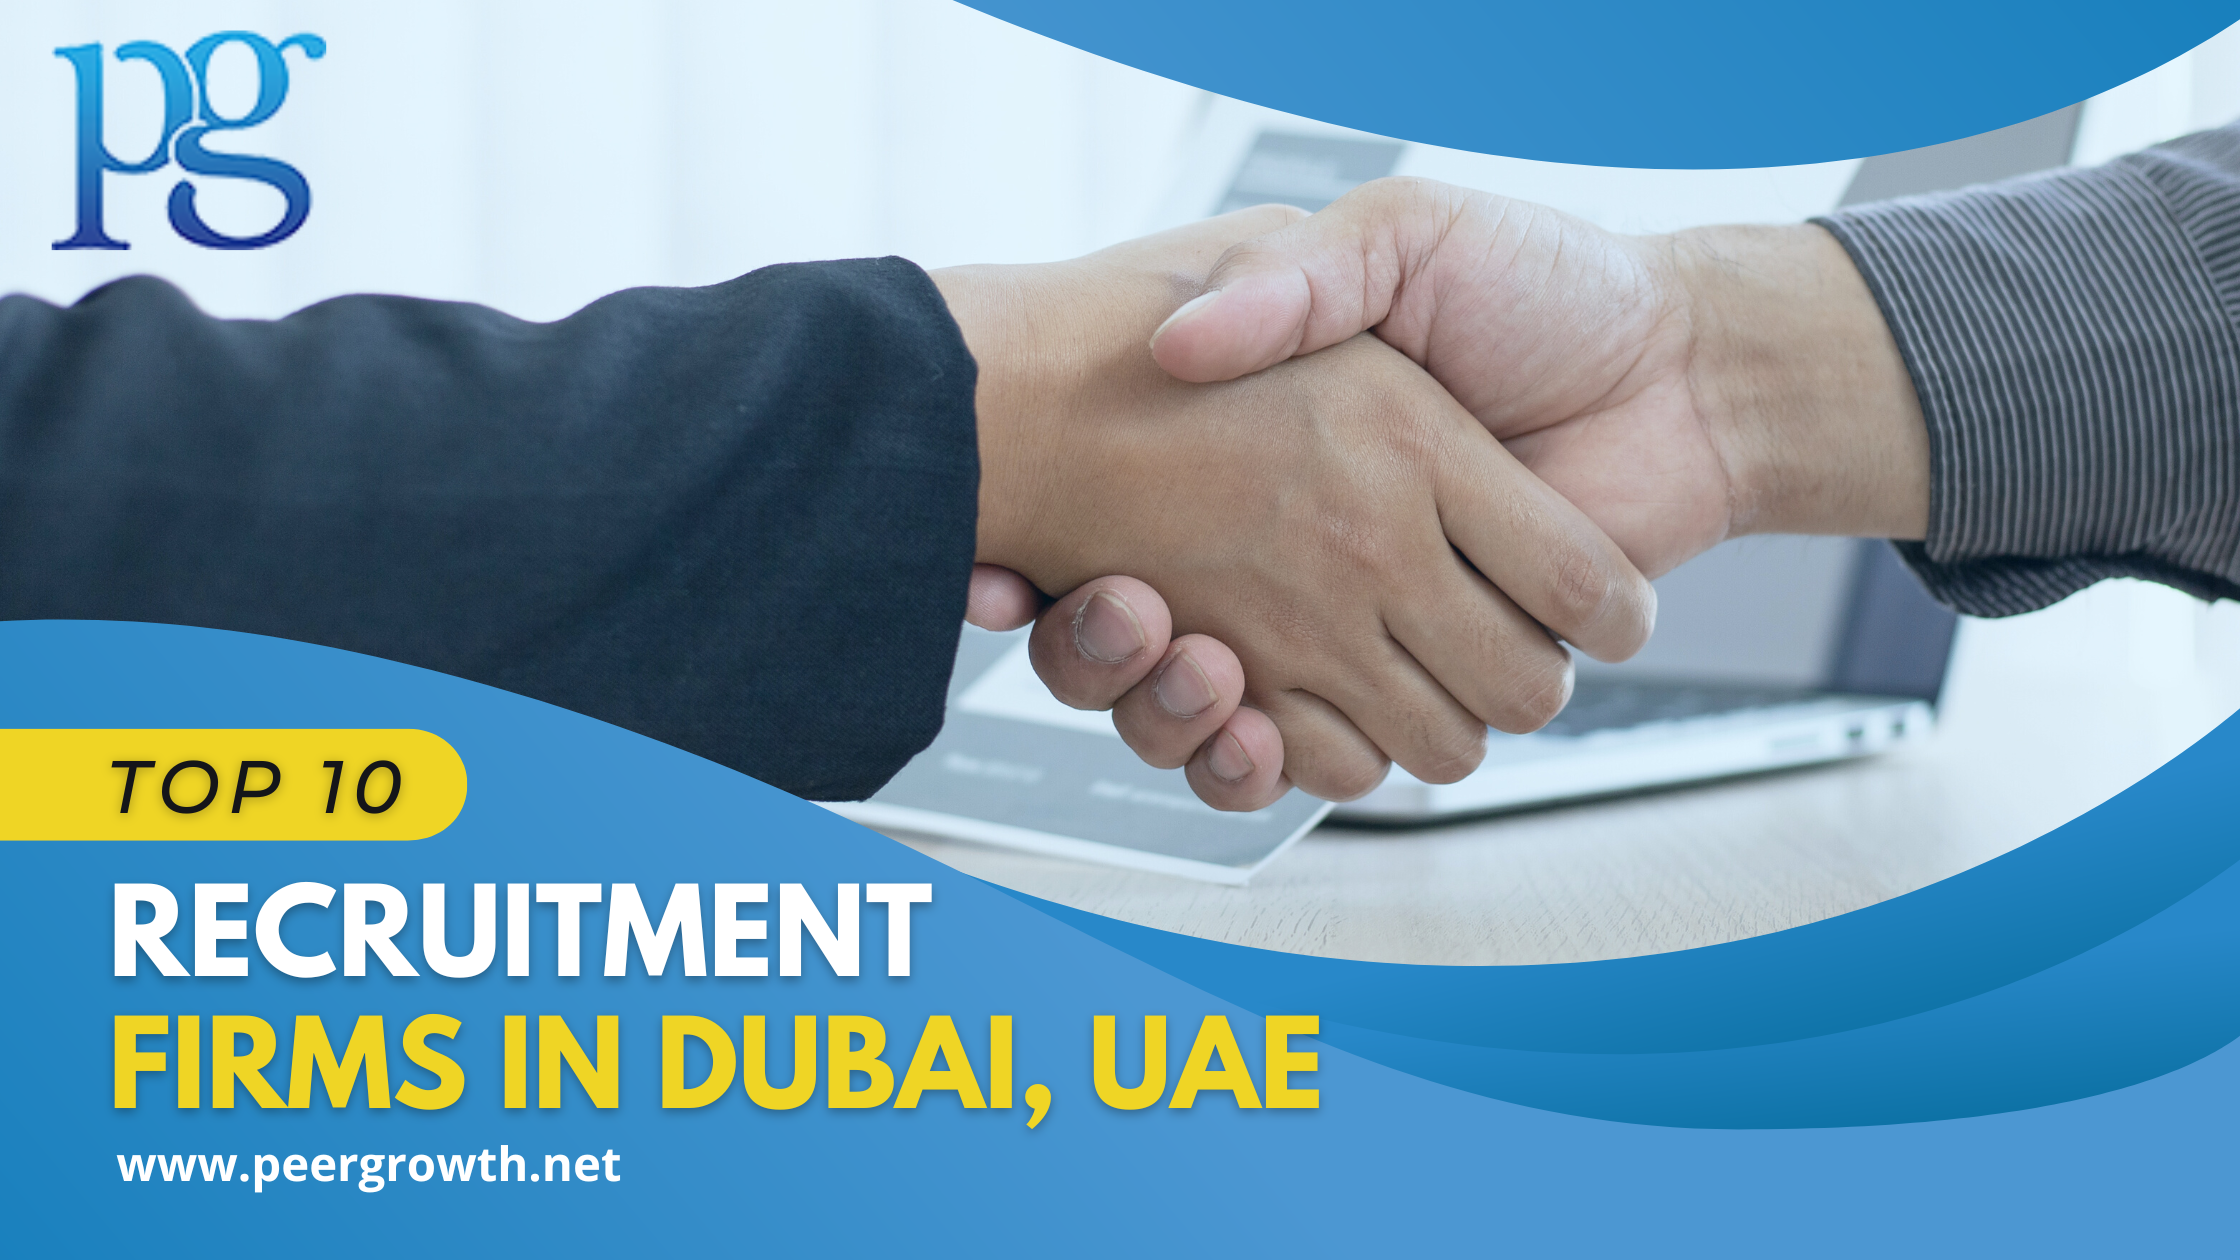 Top 10 Top Recruitment Firms in Dubai, UAE